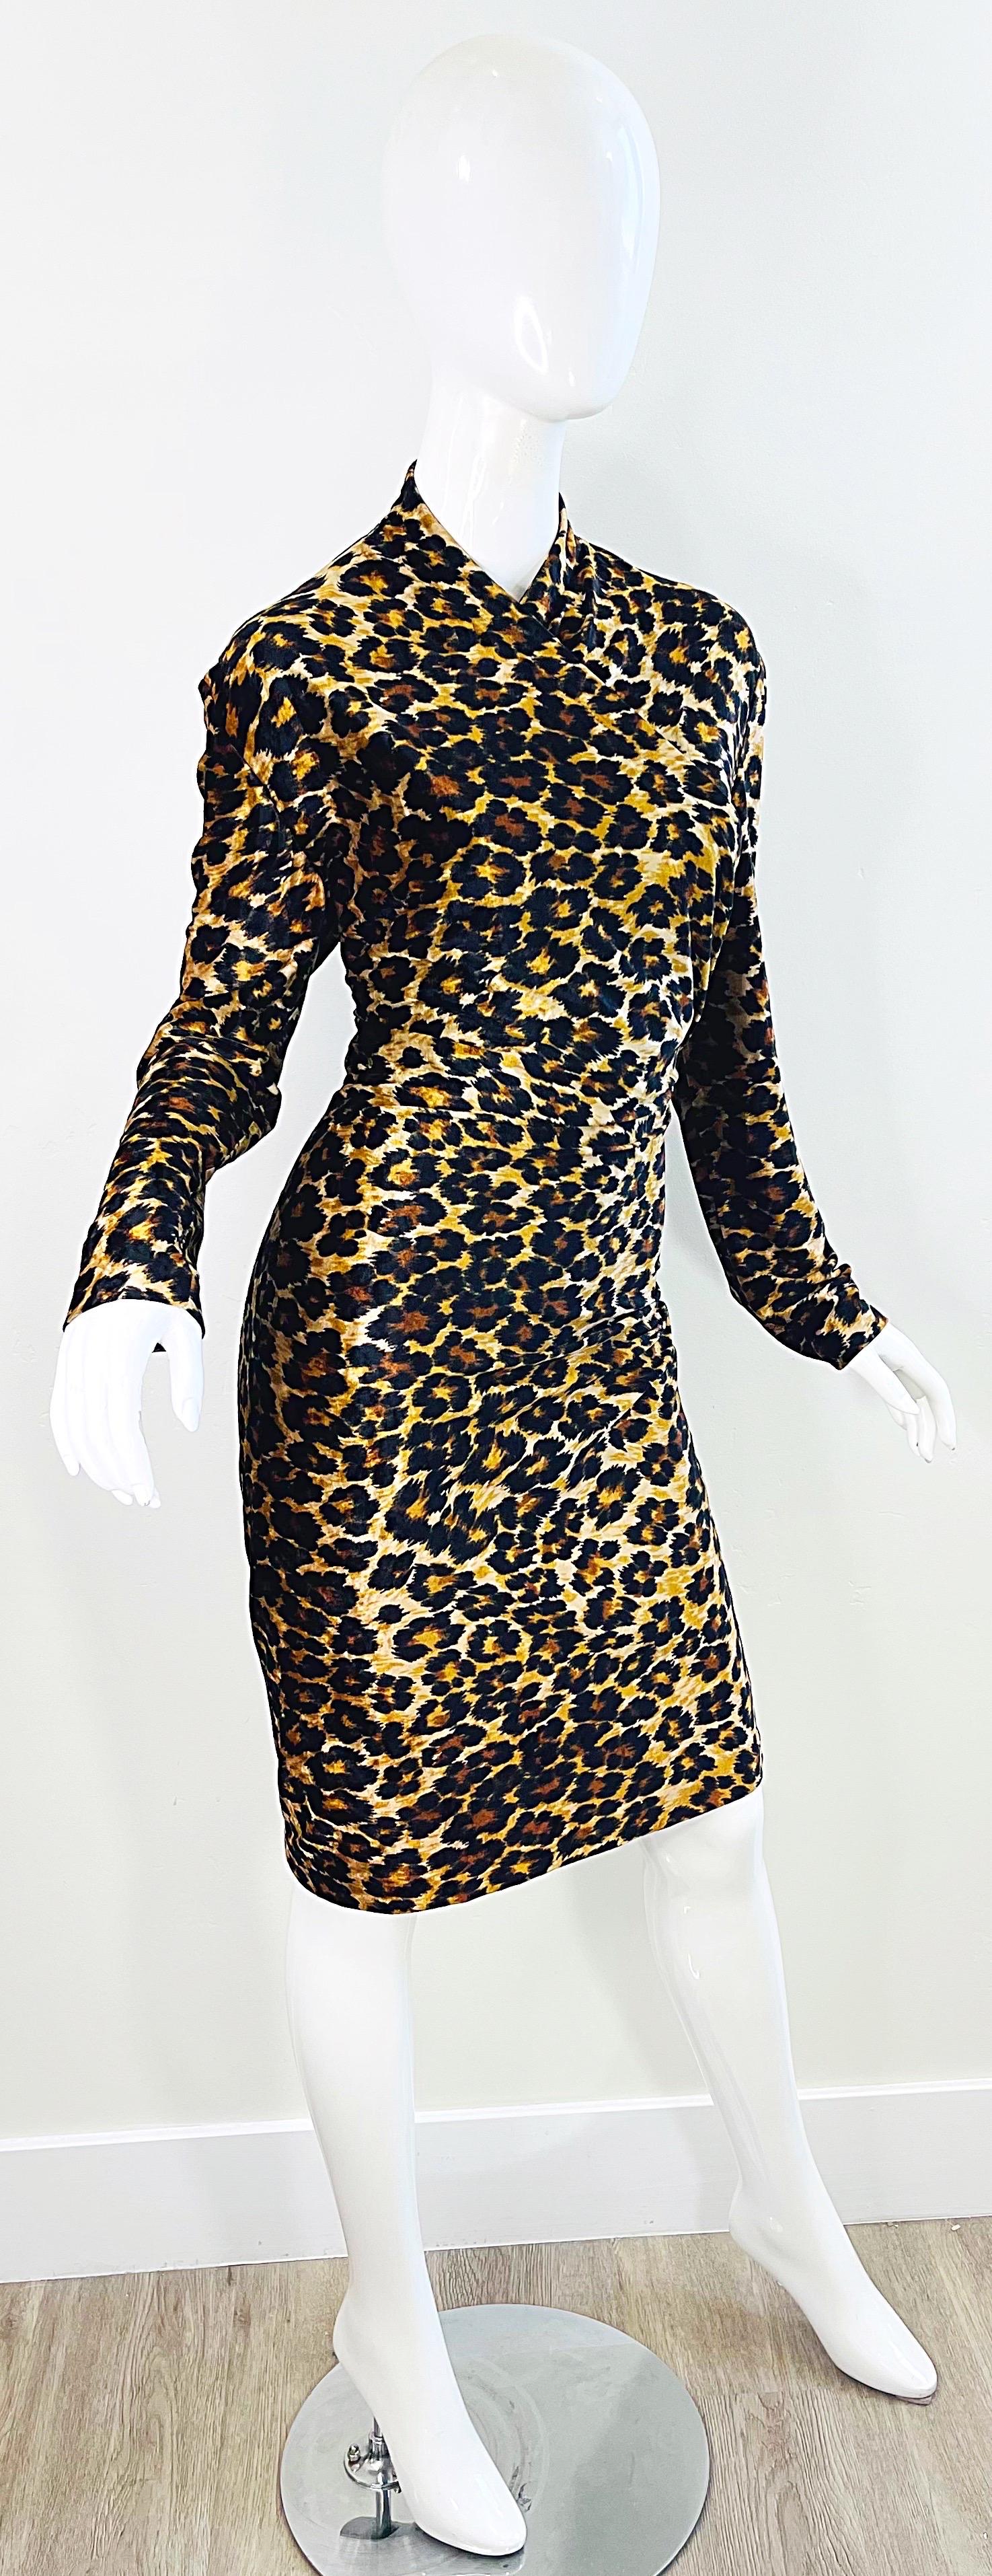 Documented Patrick Kelly 1989 Leopard Print Size Large Velour Vintage Dress 80s For Sale 6